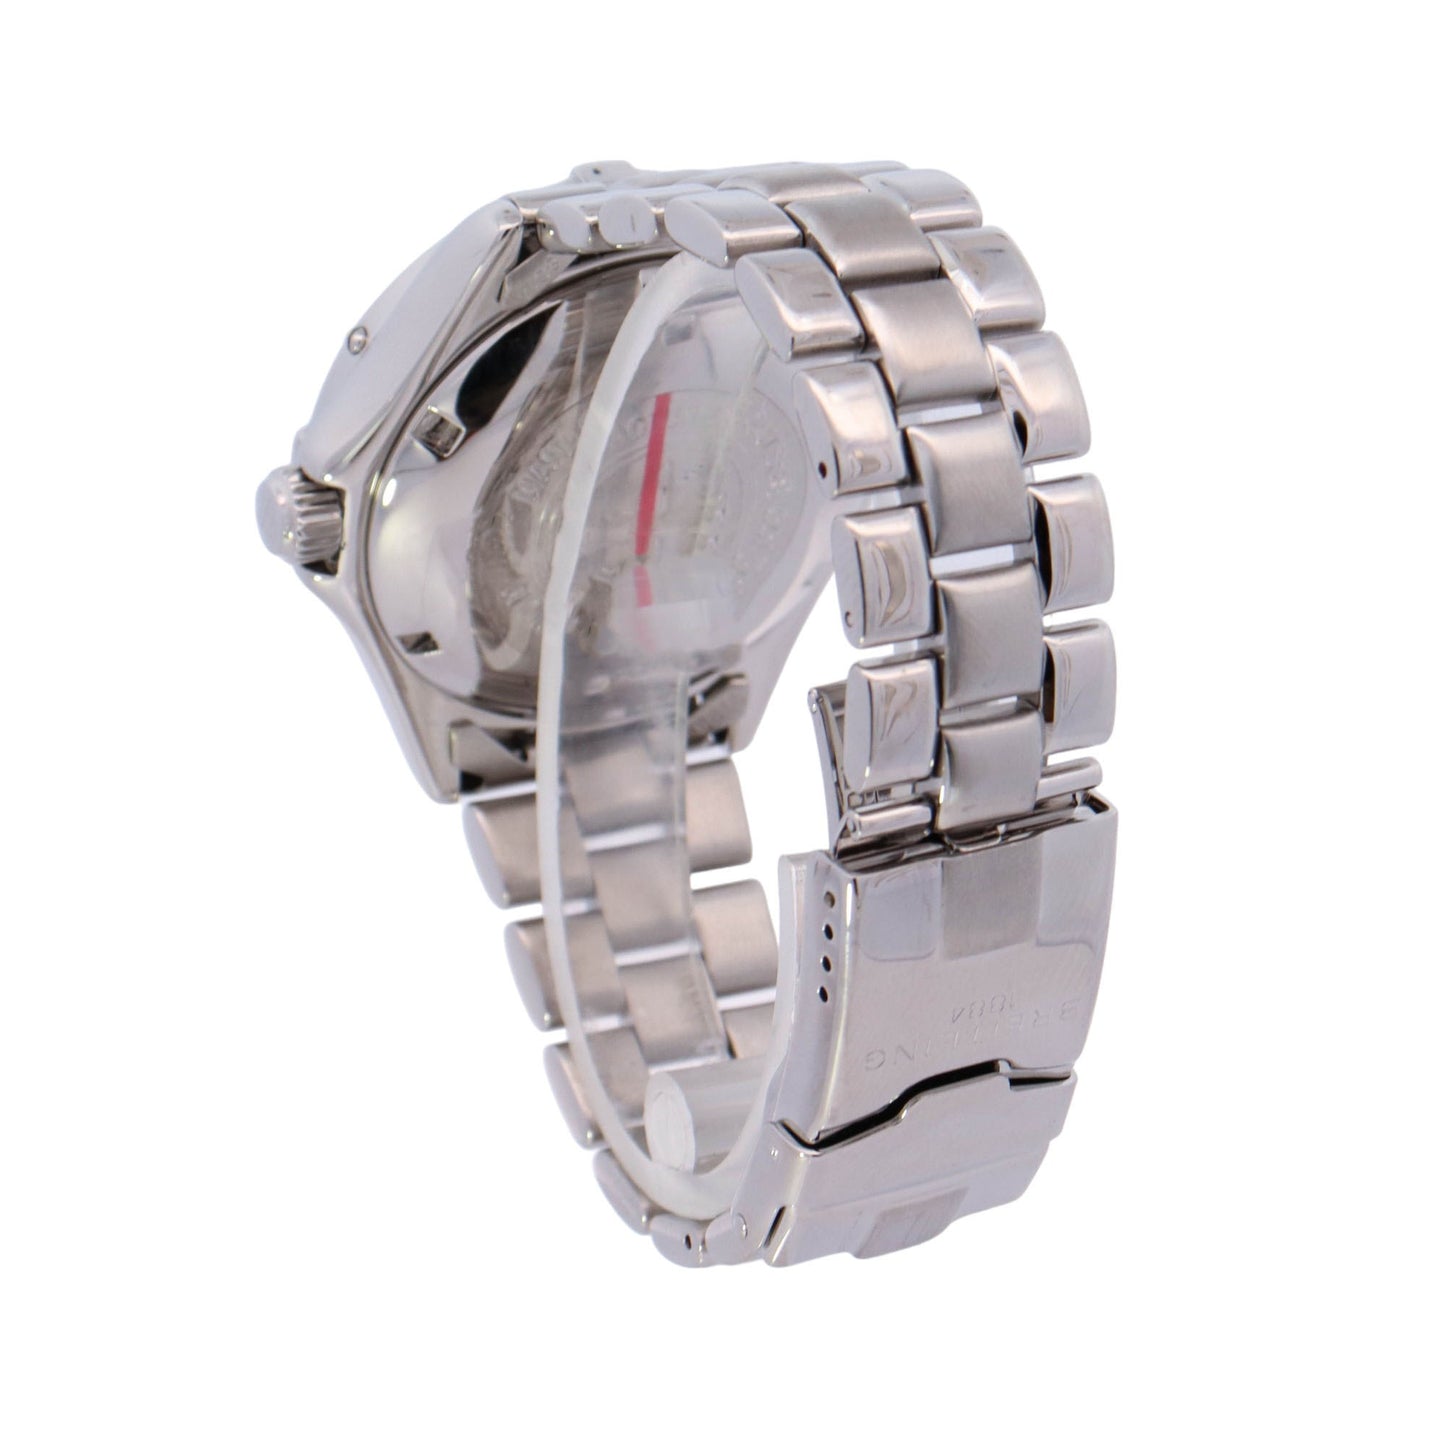 Breitling Super Ocean Stainless Steel 41mm Blue Arabic Dial Watch Reference #: A17040 - Happy Jewelers Fine Jewelry Lifetime Warranty